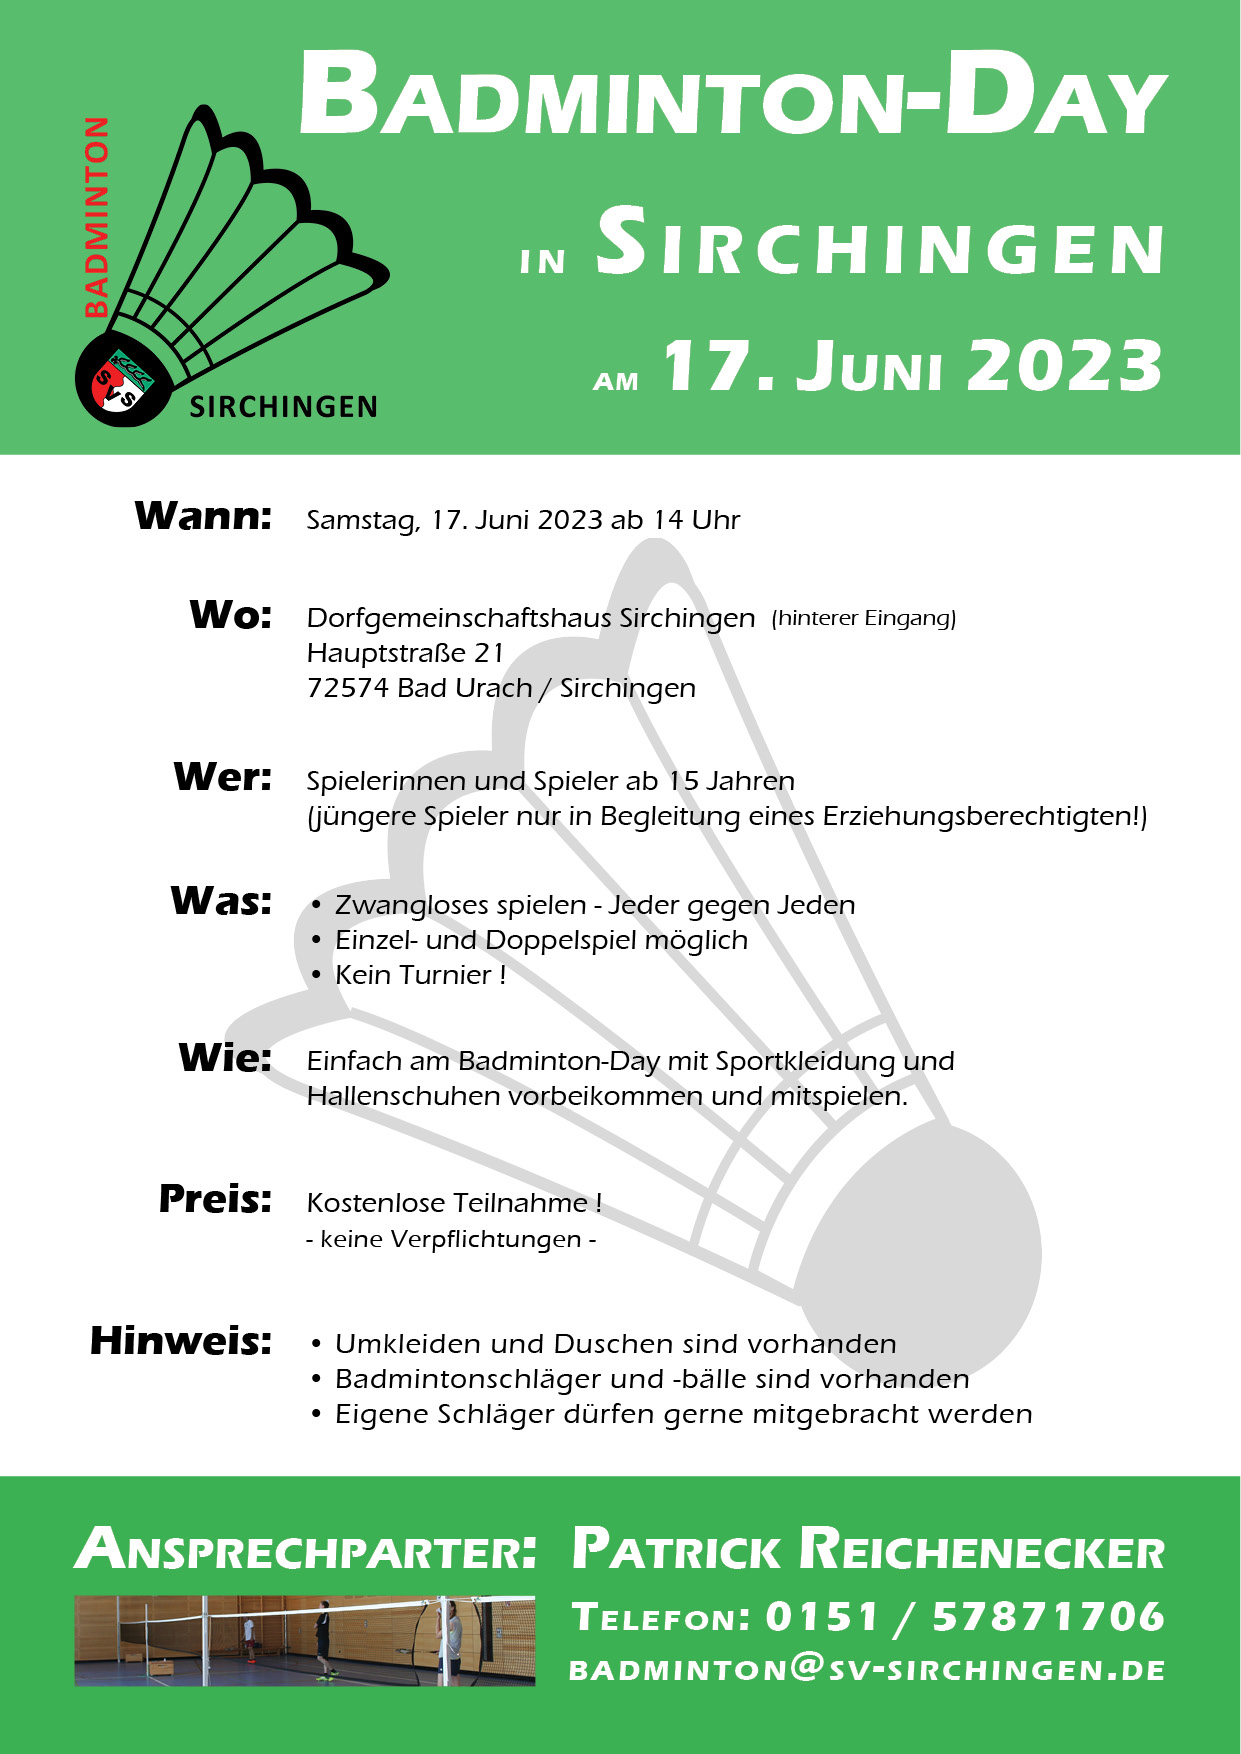 Badminton Day 2023 Sirchingen